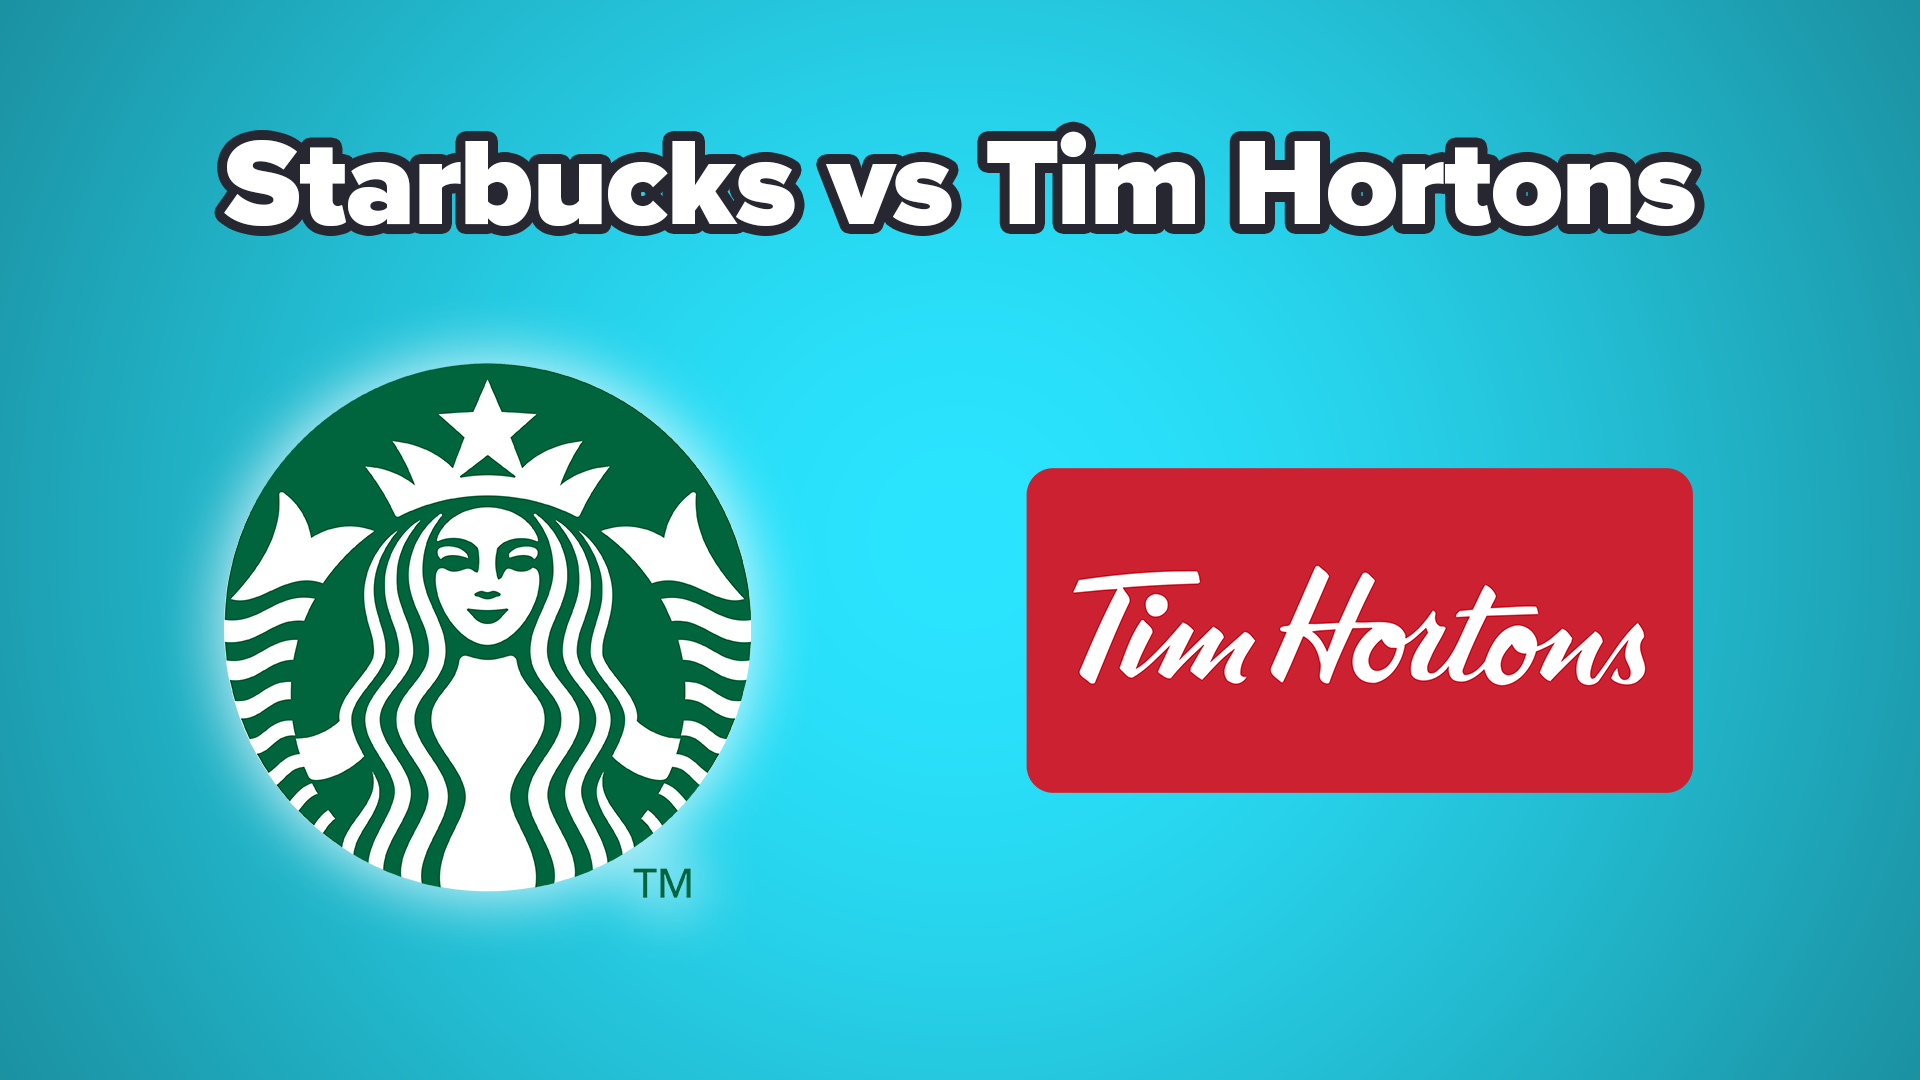 Tims Hortons vs Starbucks - Which is better?